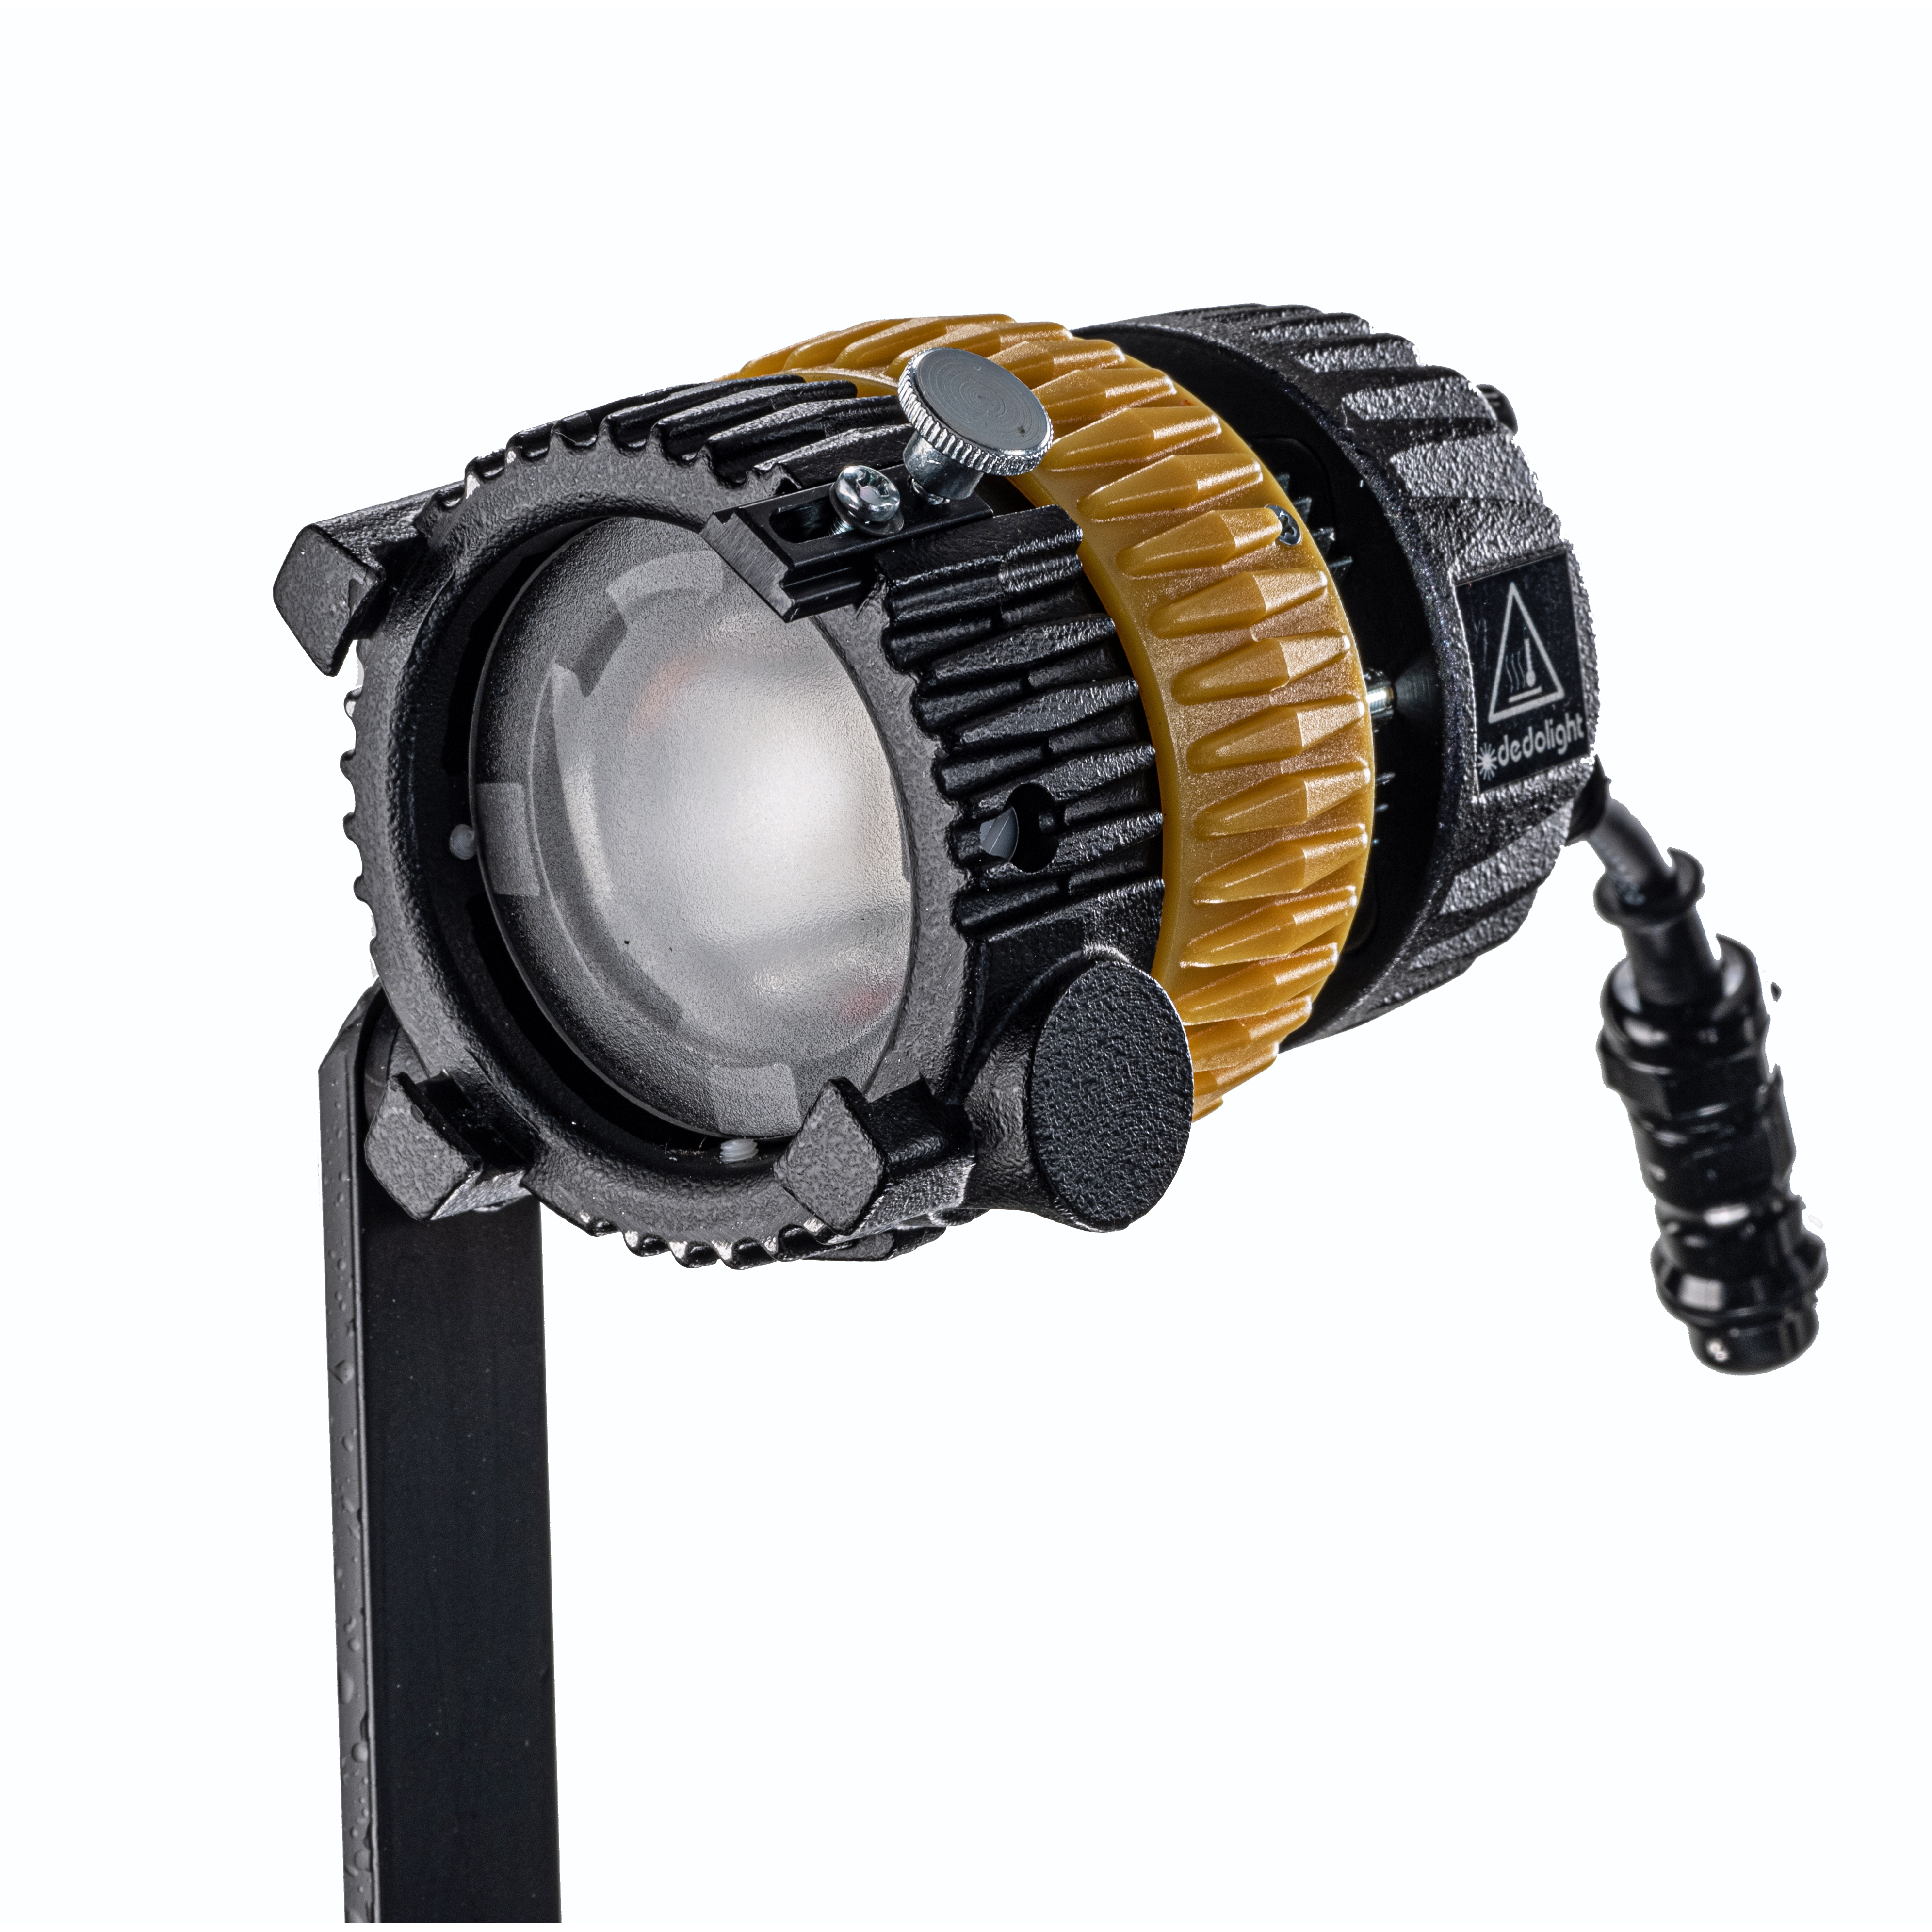 Dedolight NEO  DLED3N-Bi  - fokussierbare 40W Turbo LED Bicolor Leuchte